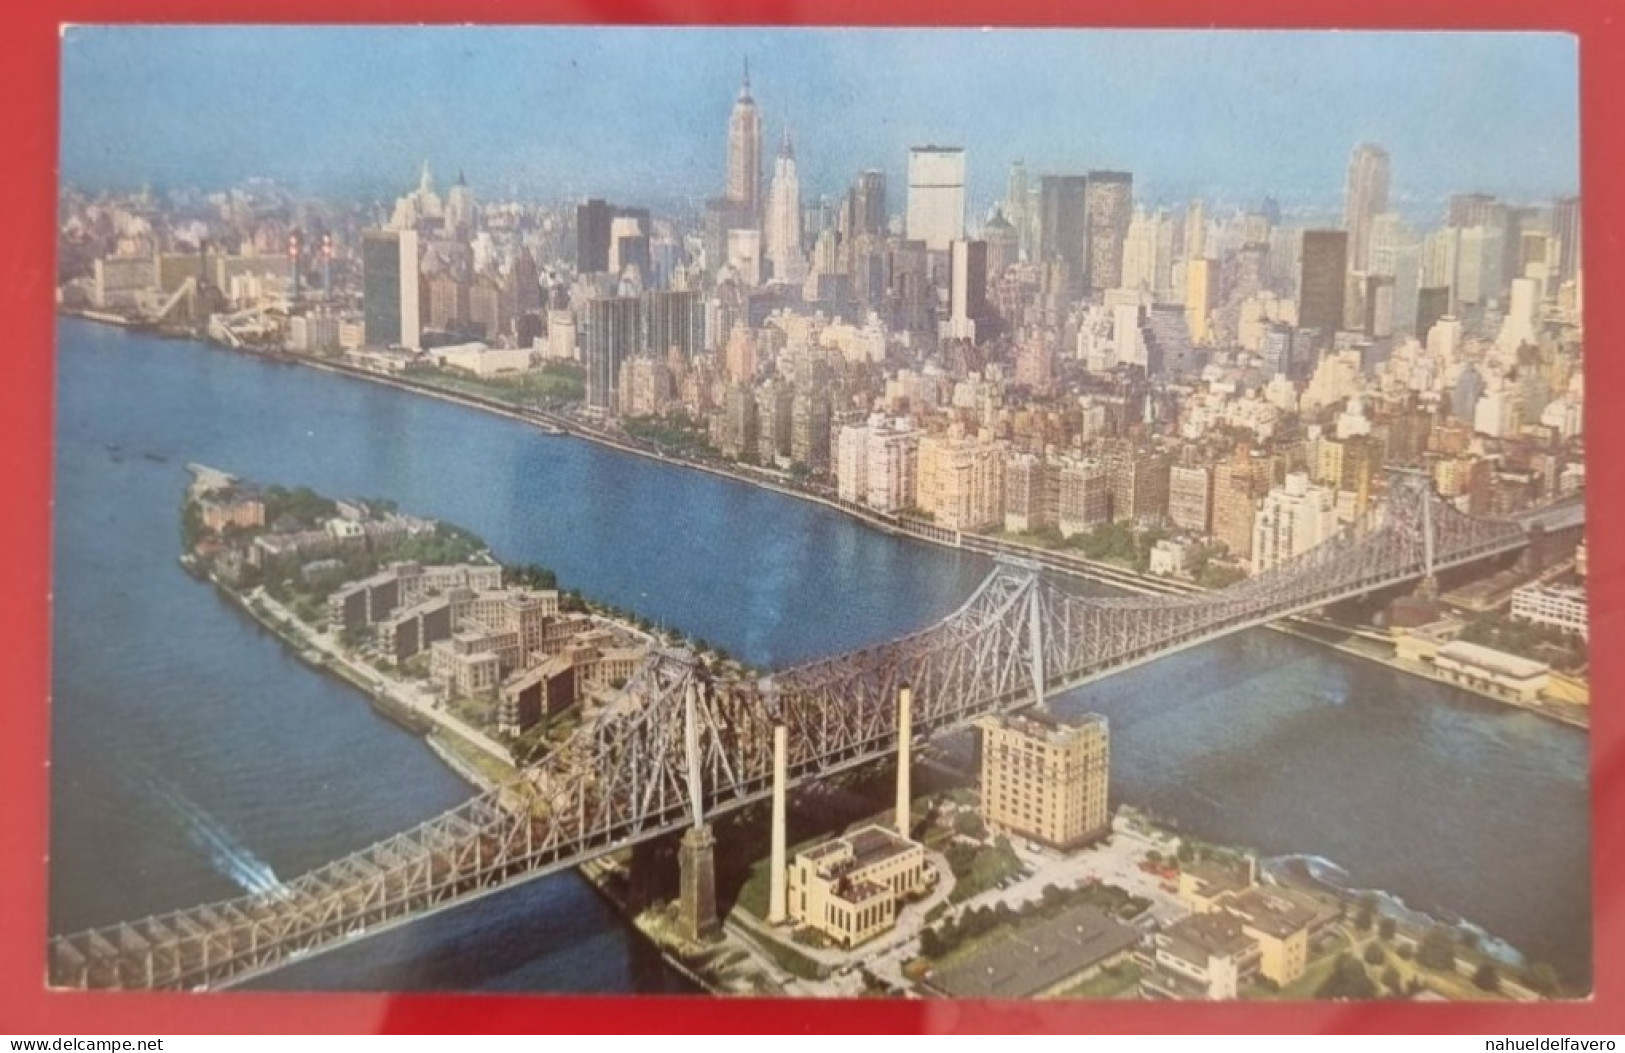 Uncirculated Postcard - USA - NY, NEW YORK CITY - AERIAL VIEW OF 59TH ST. BRIDGE - Brücken Und Tunnel